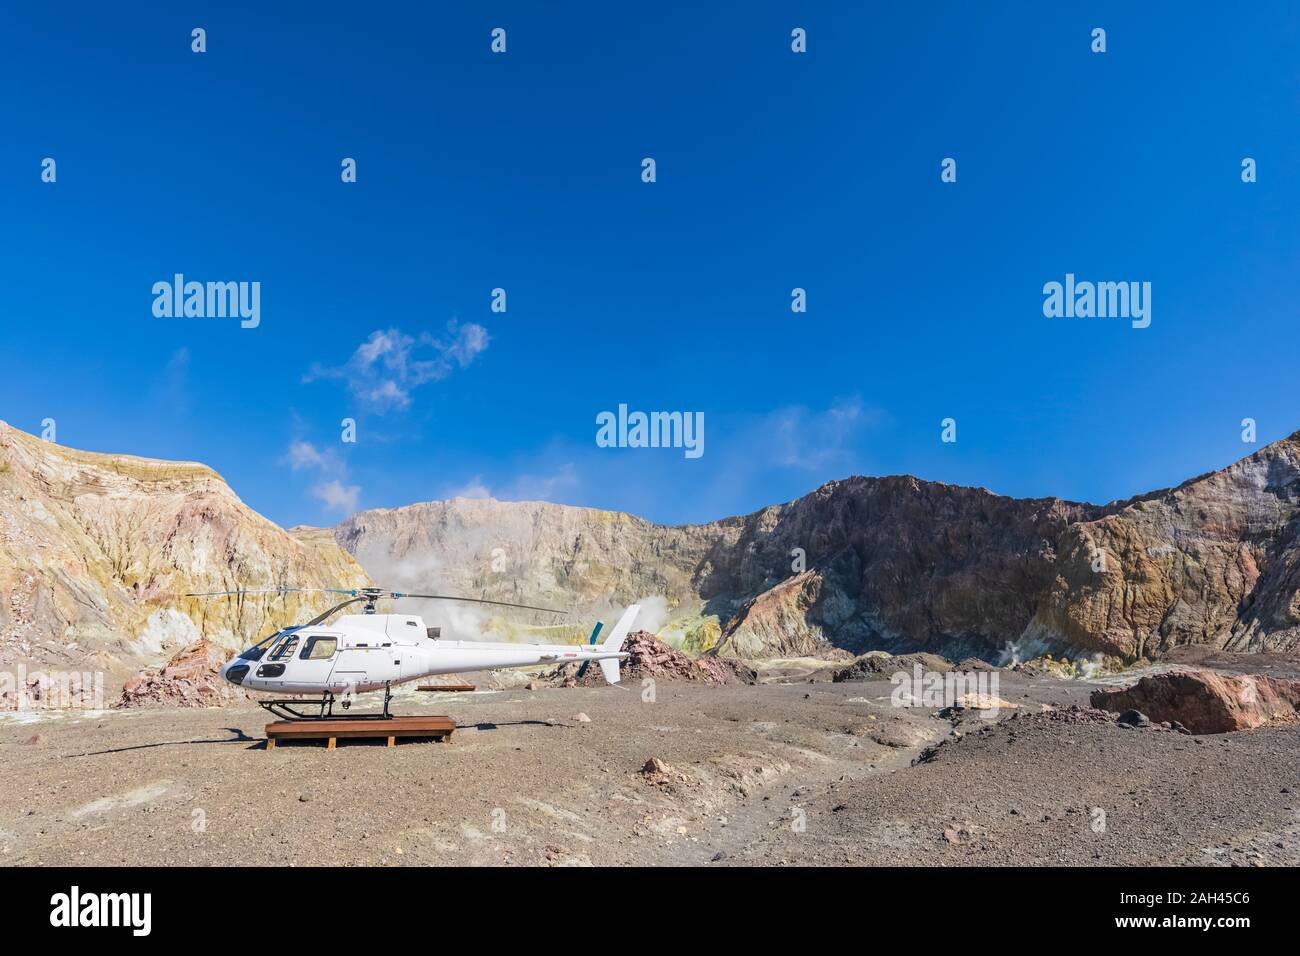 Nueva Zelanda, Isla Norte, Whakatane, Helicóptero de pie en la Isla Blanca (Whakaari) Foto de stock